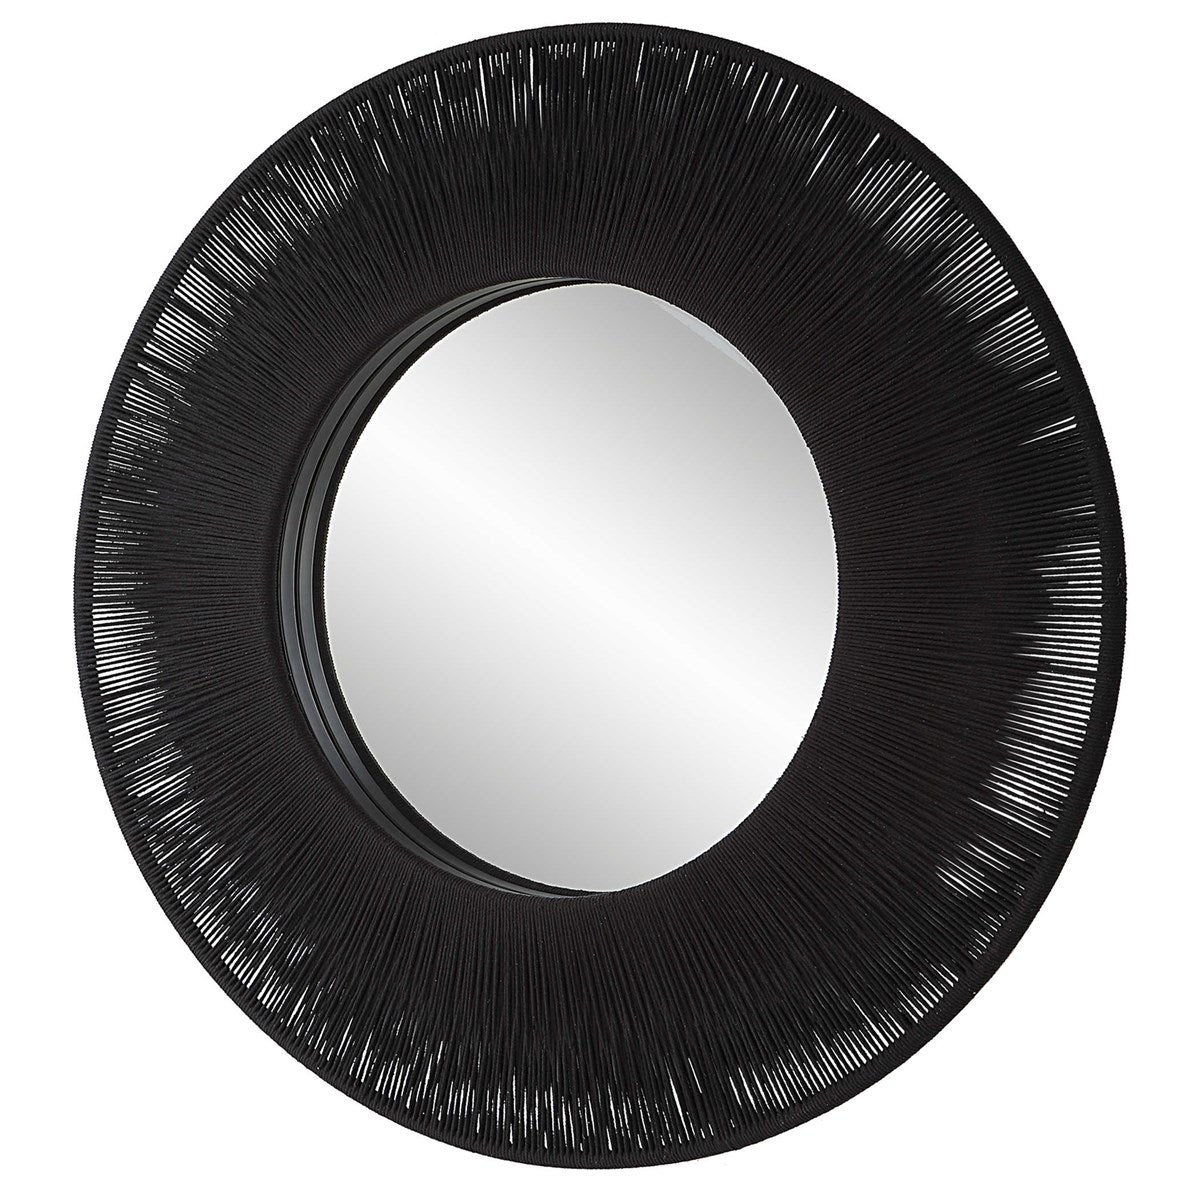 Sailors Knot Round Mirror - Black